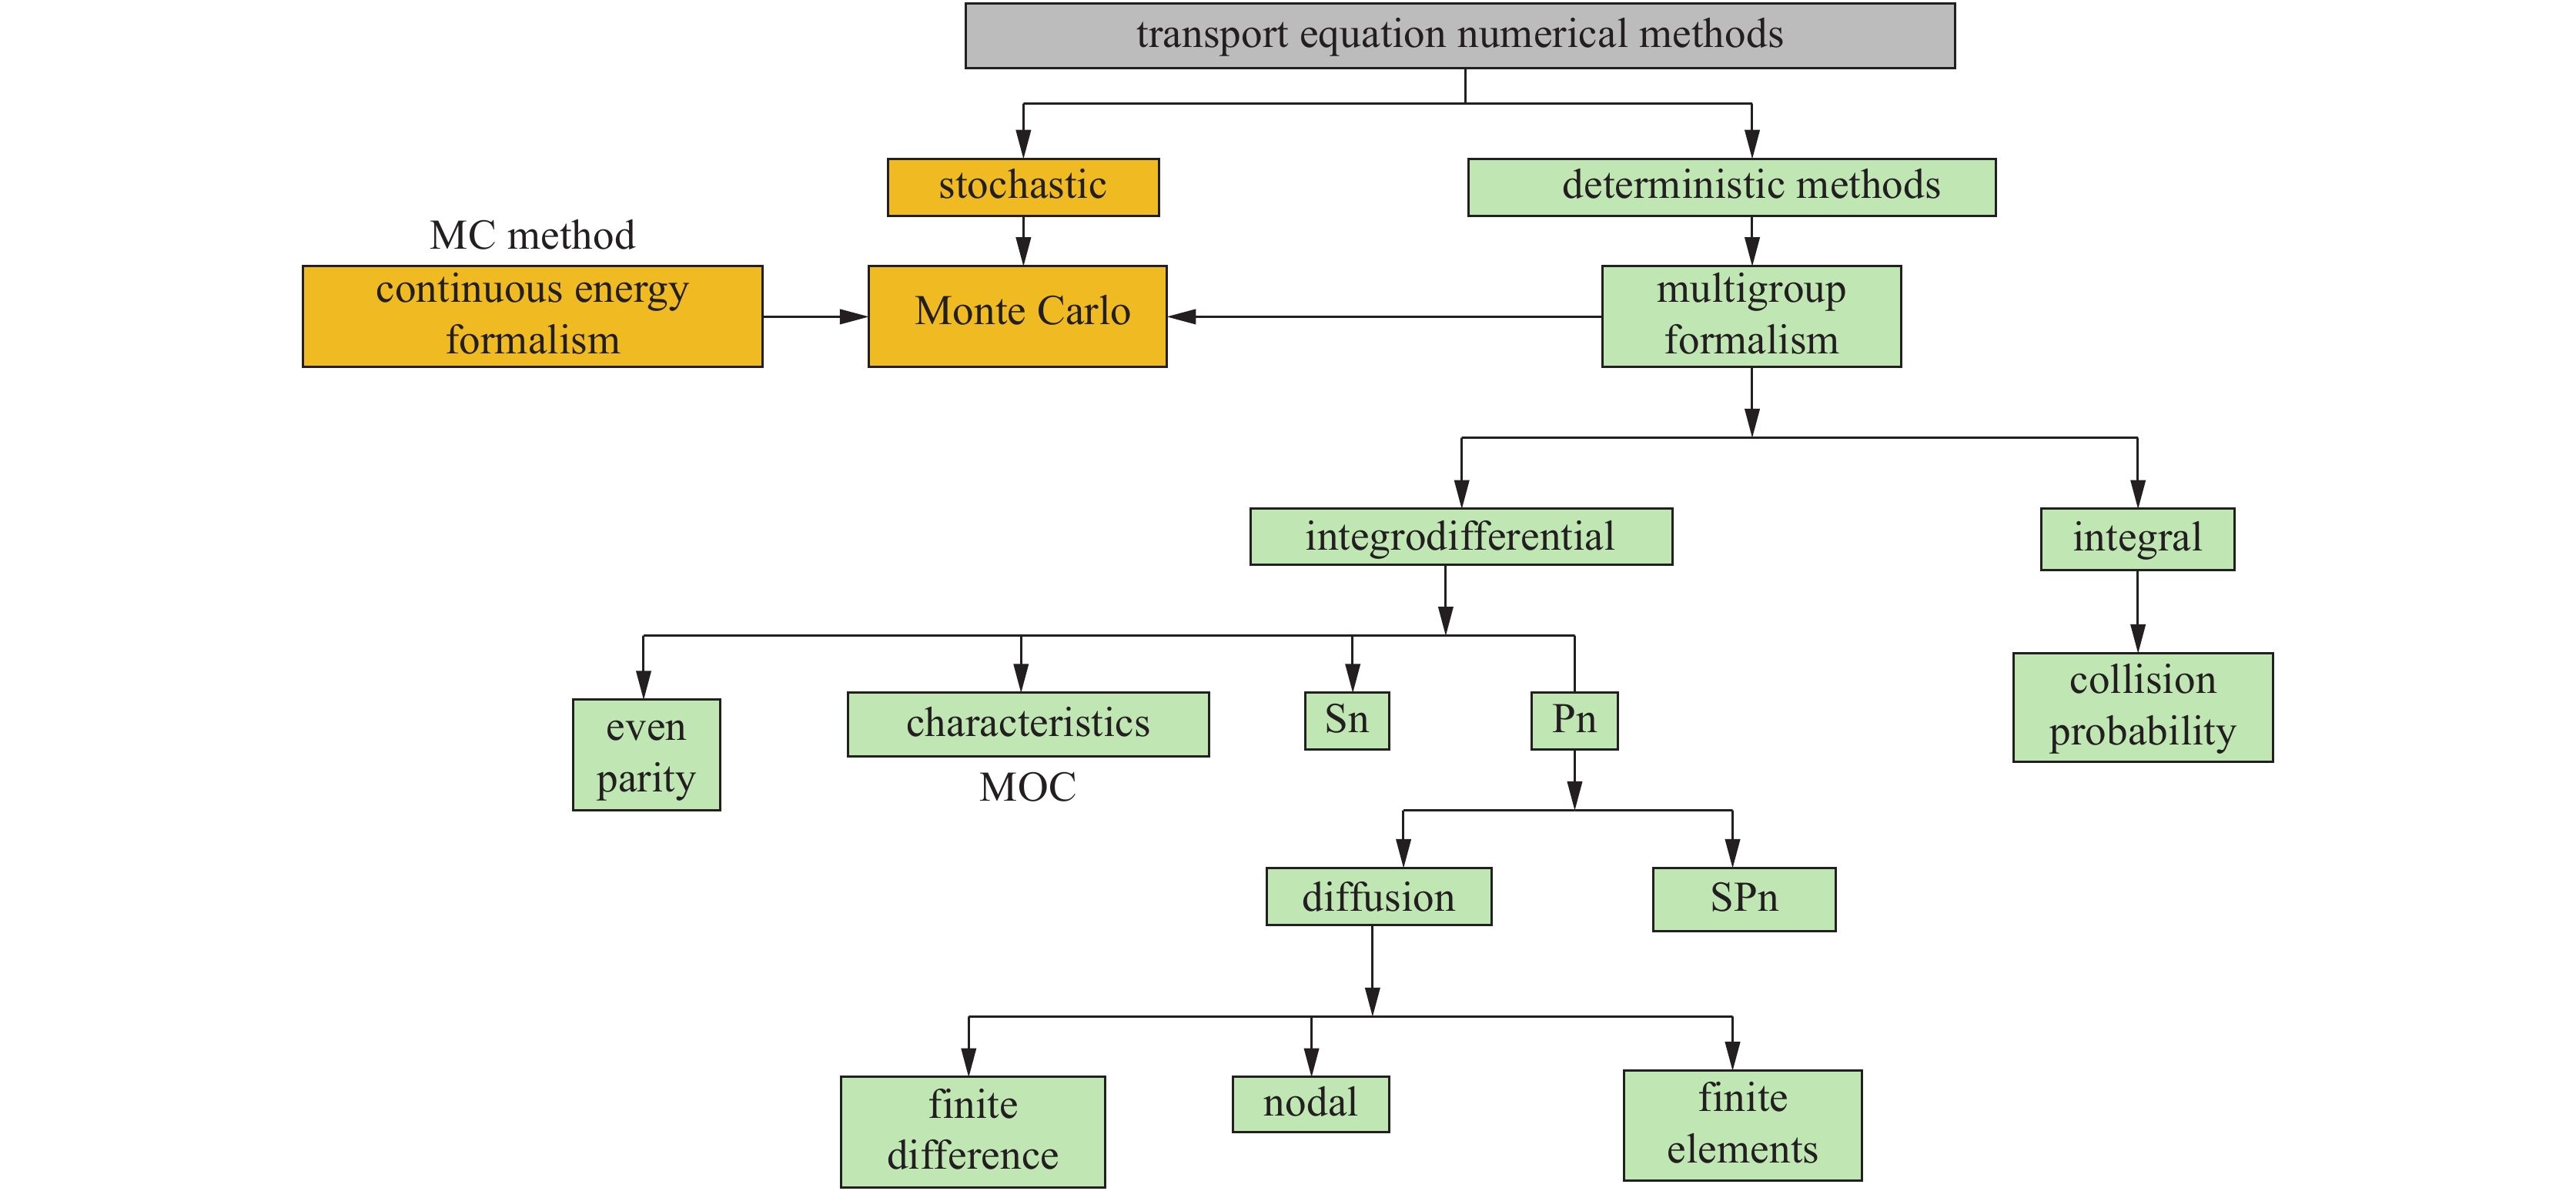 Simulation methods of transport equation